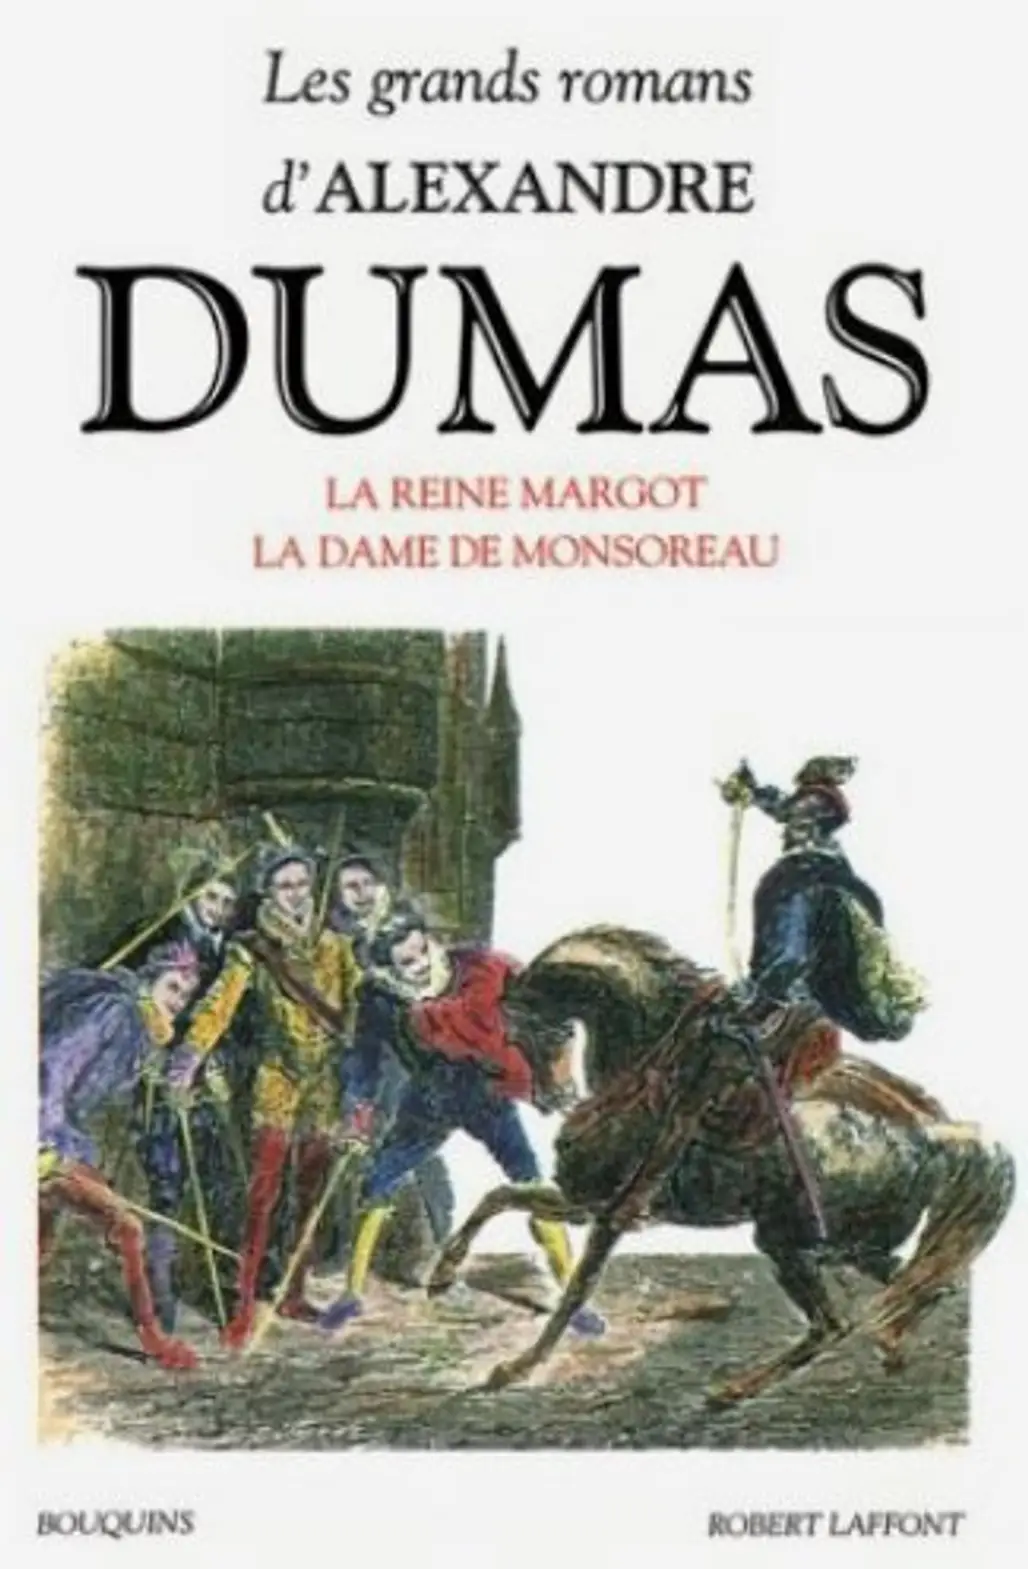 La Dame De Monsoreau by Alexandre Dumas